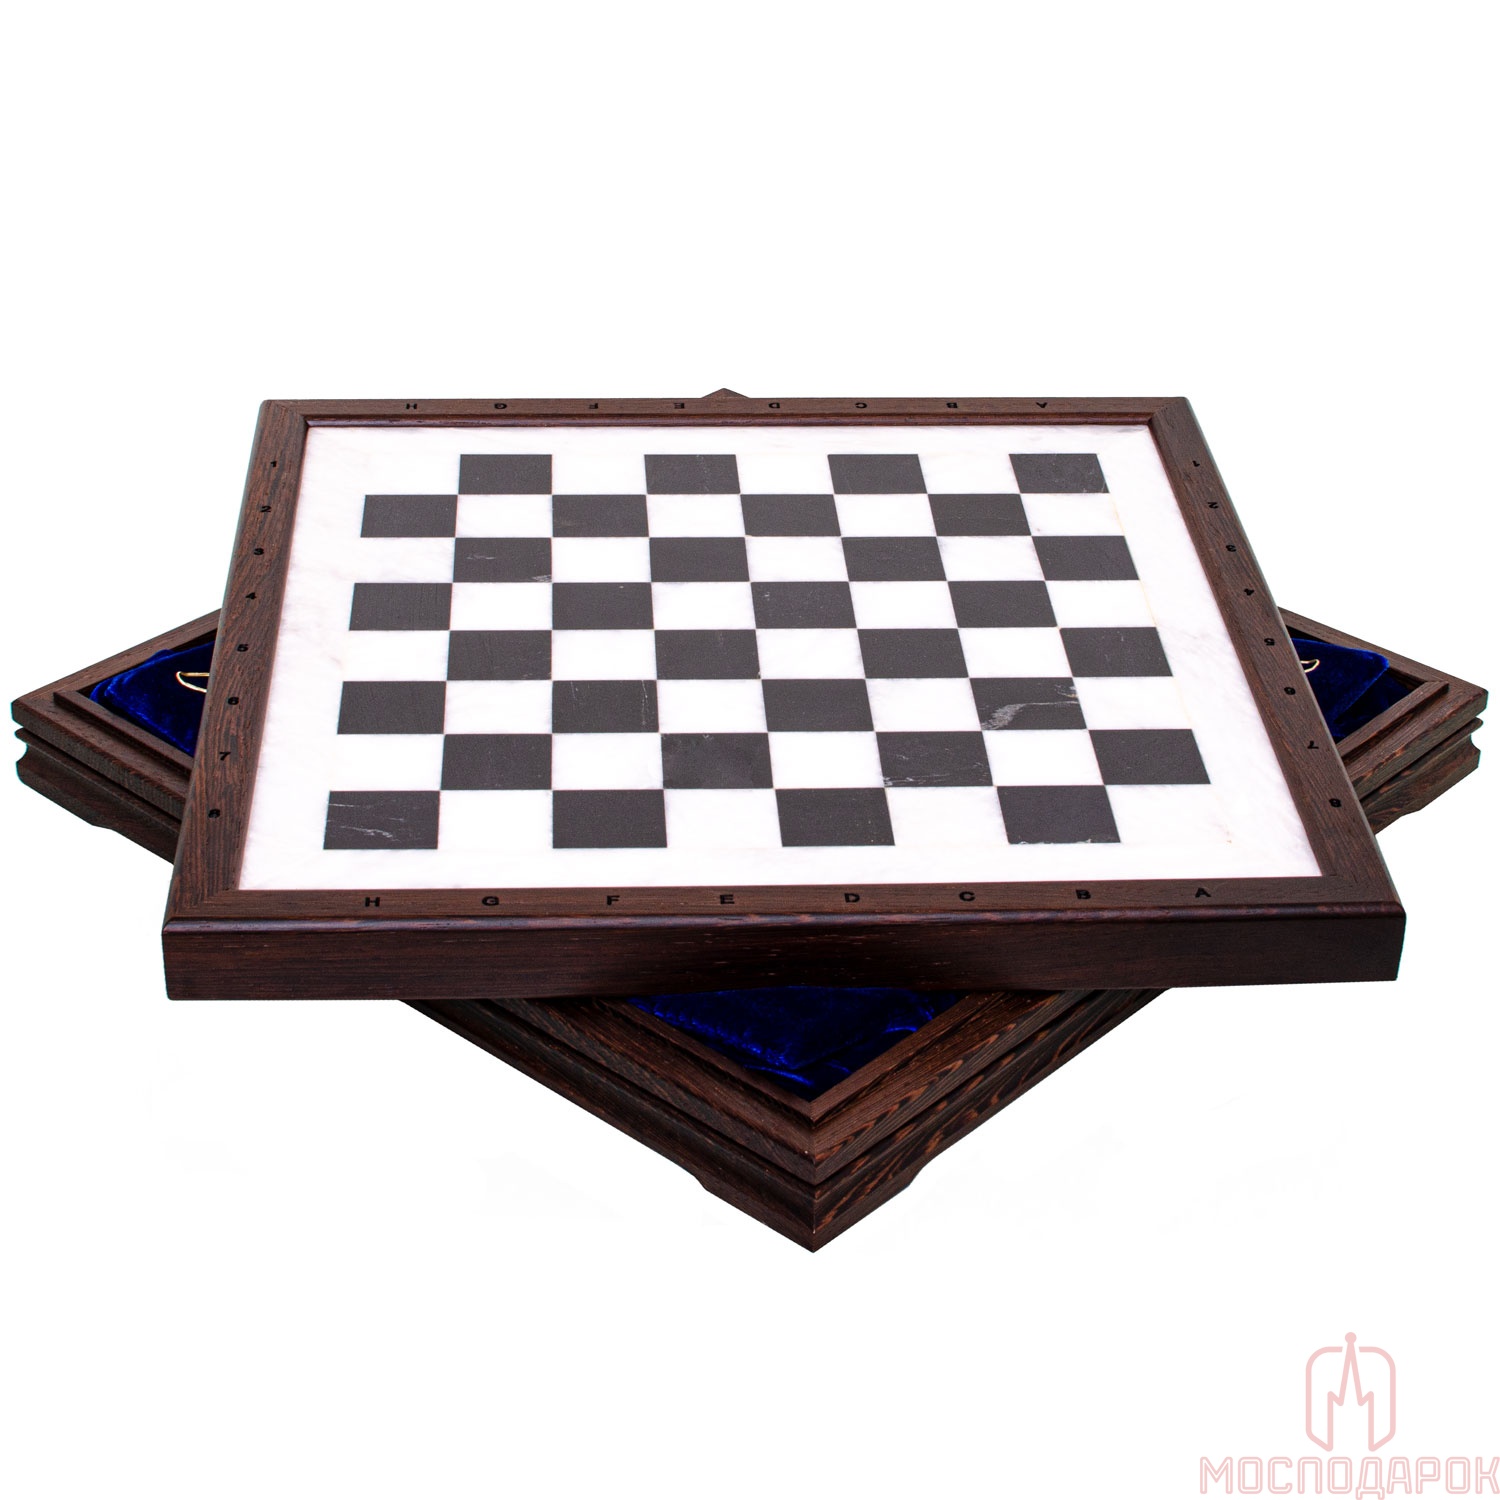 Шахматы "Европейские" (мрамор, венге) - артикул: 207767 | Мосподарок 